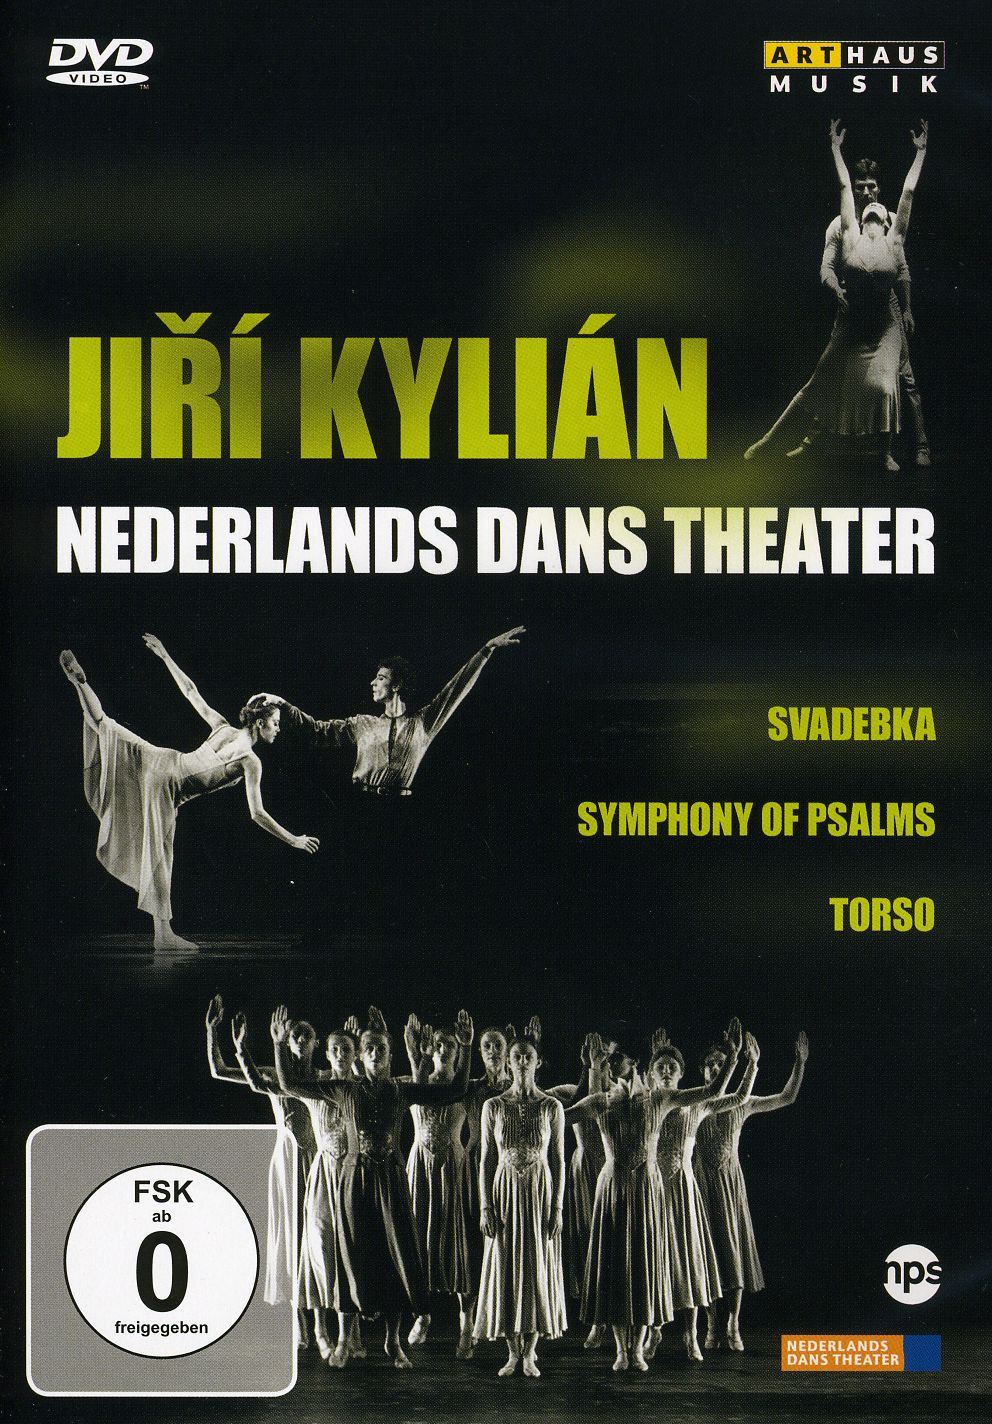 JIRI KYLIAN & THE NEDERLANDS DANS